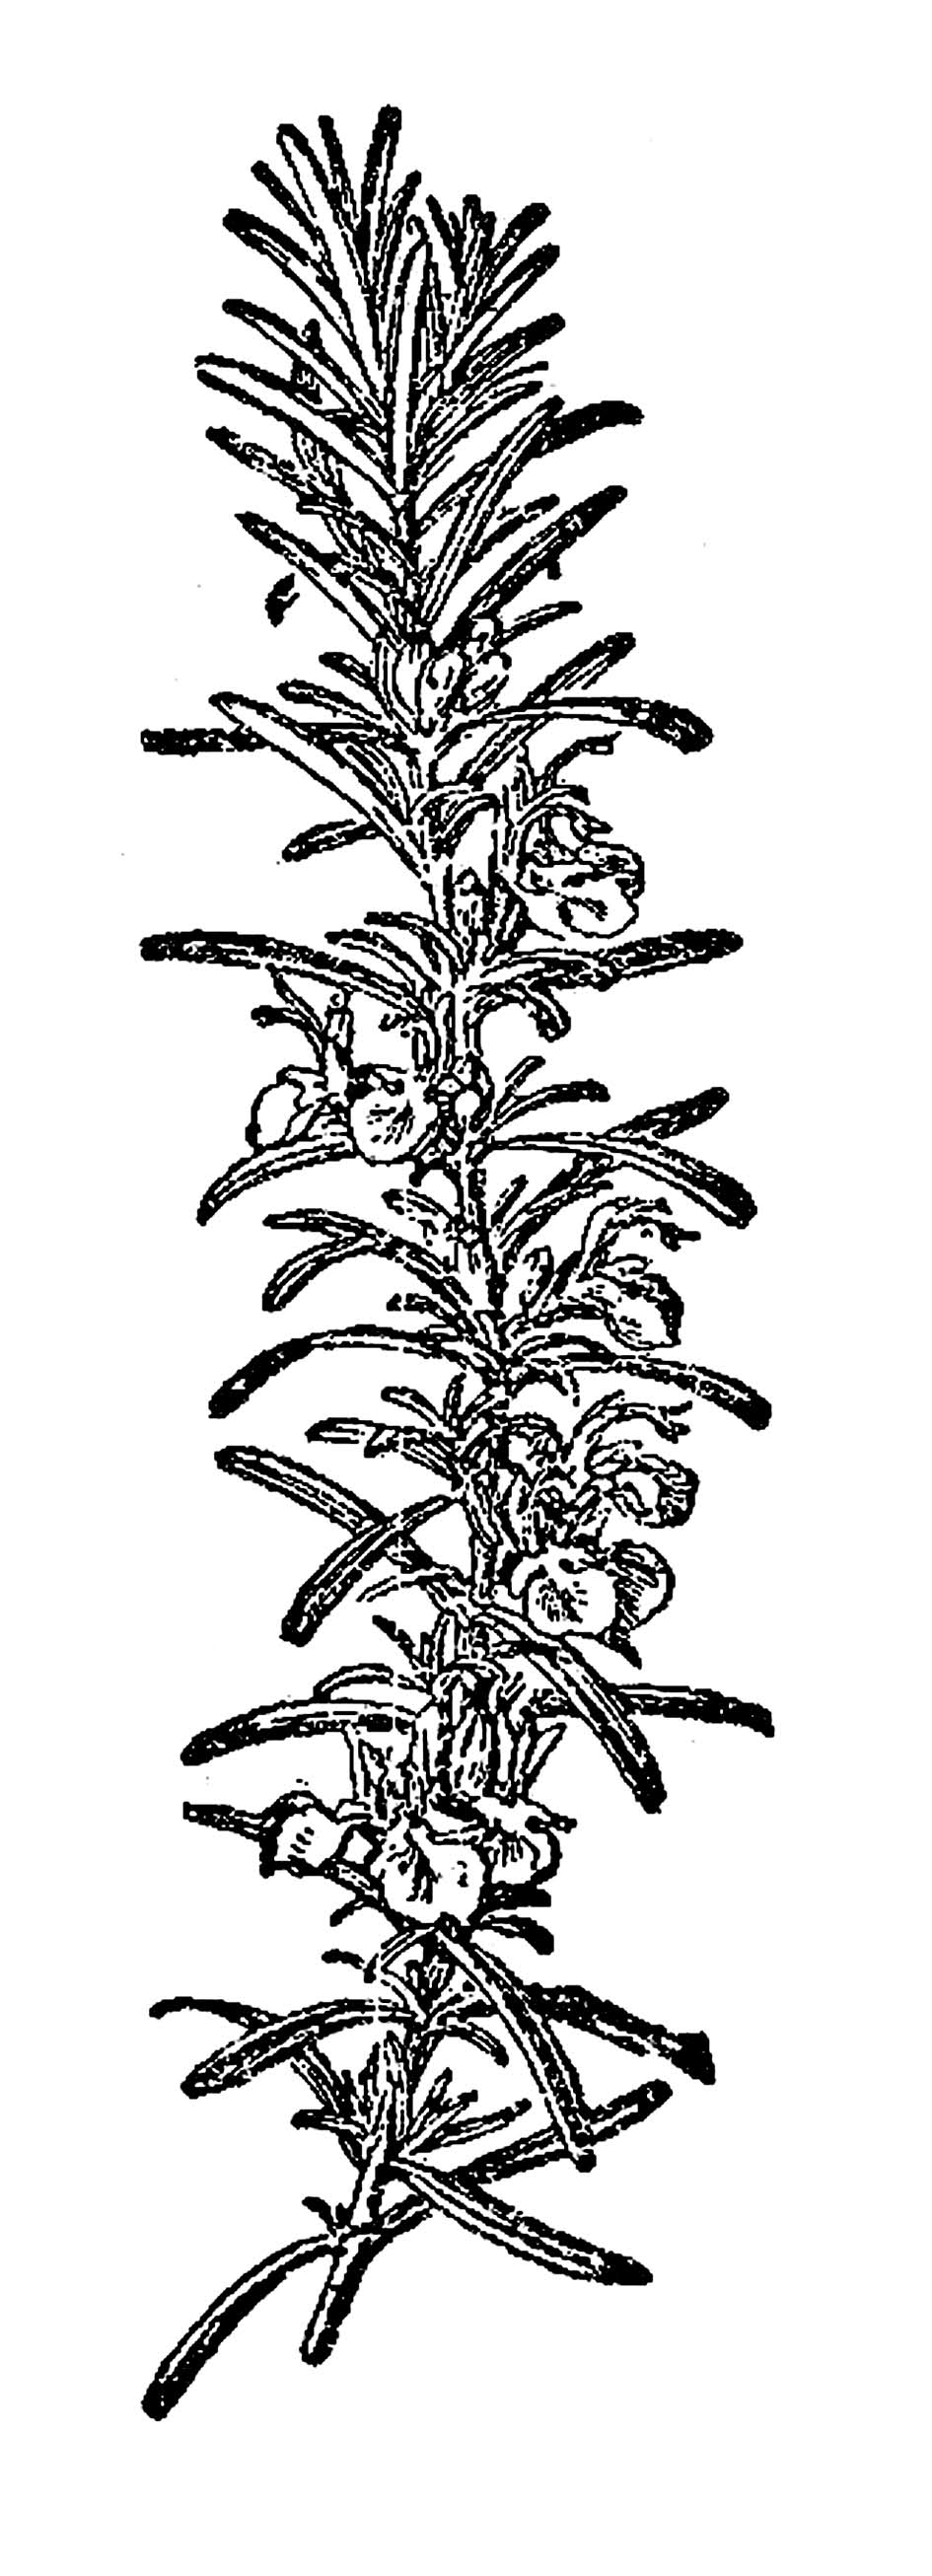 IRODALOM Bazzaz, Fakhri A. (1970): Secondary Dormancy in the Seeds of the Common Ragweed Ambrosia artemisiifolia. Bulletin of the Torrey Botanical Club. 97, 302 5. Béres Imre Hunyadi Károly (1980).